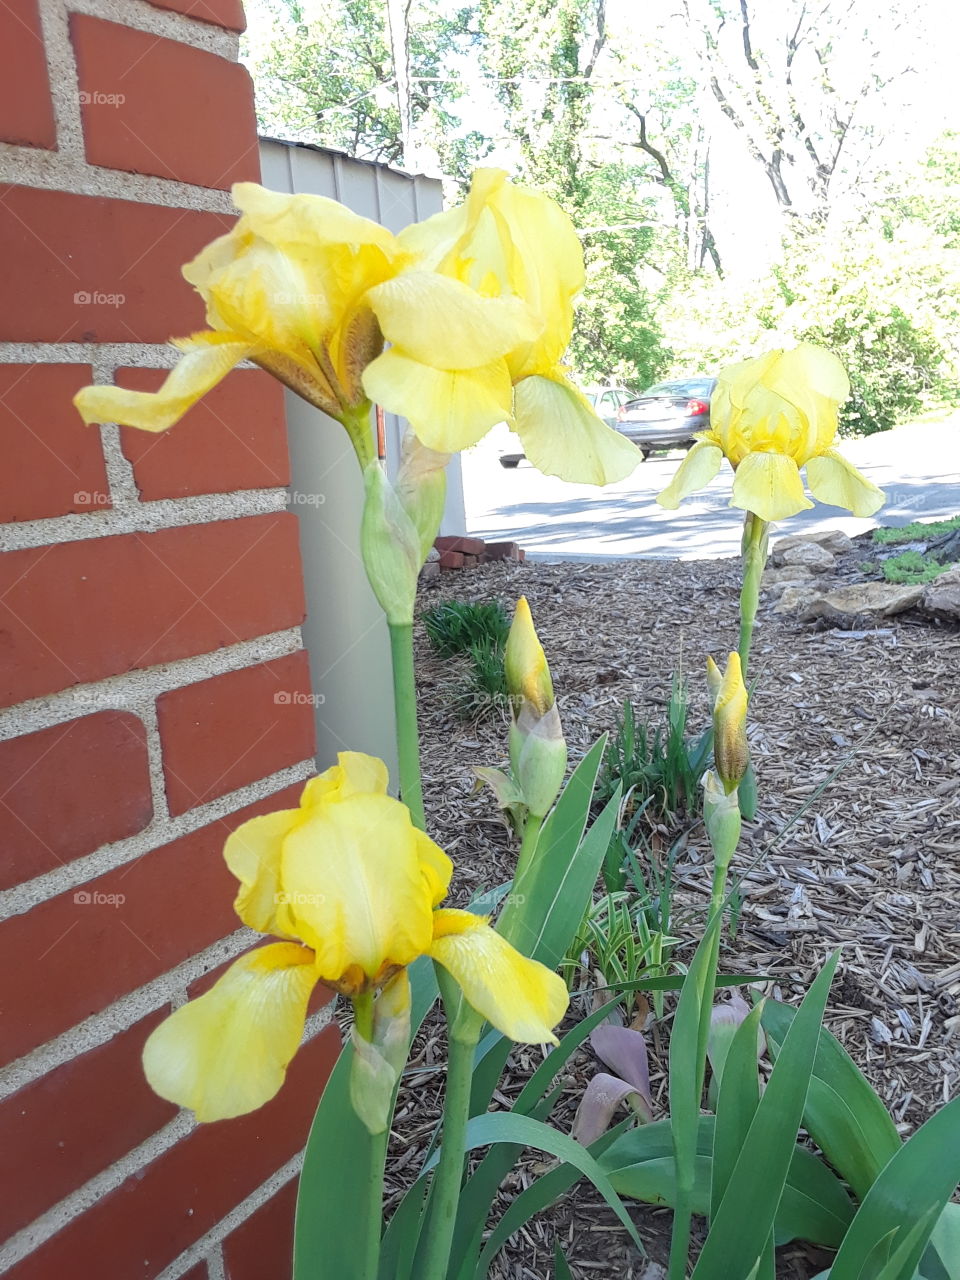 Yellow Iris with a brick wall